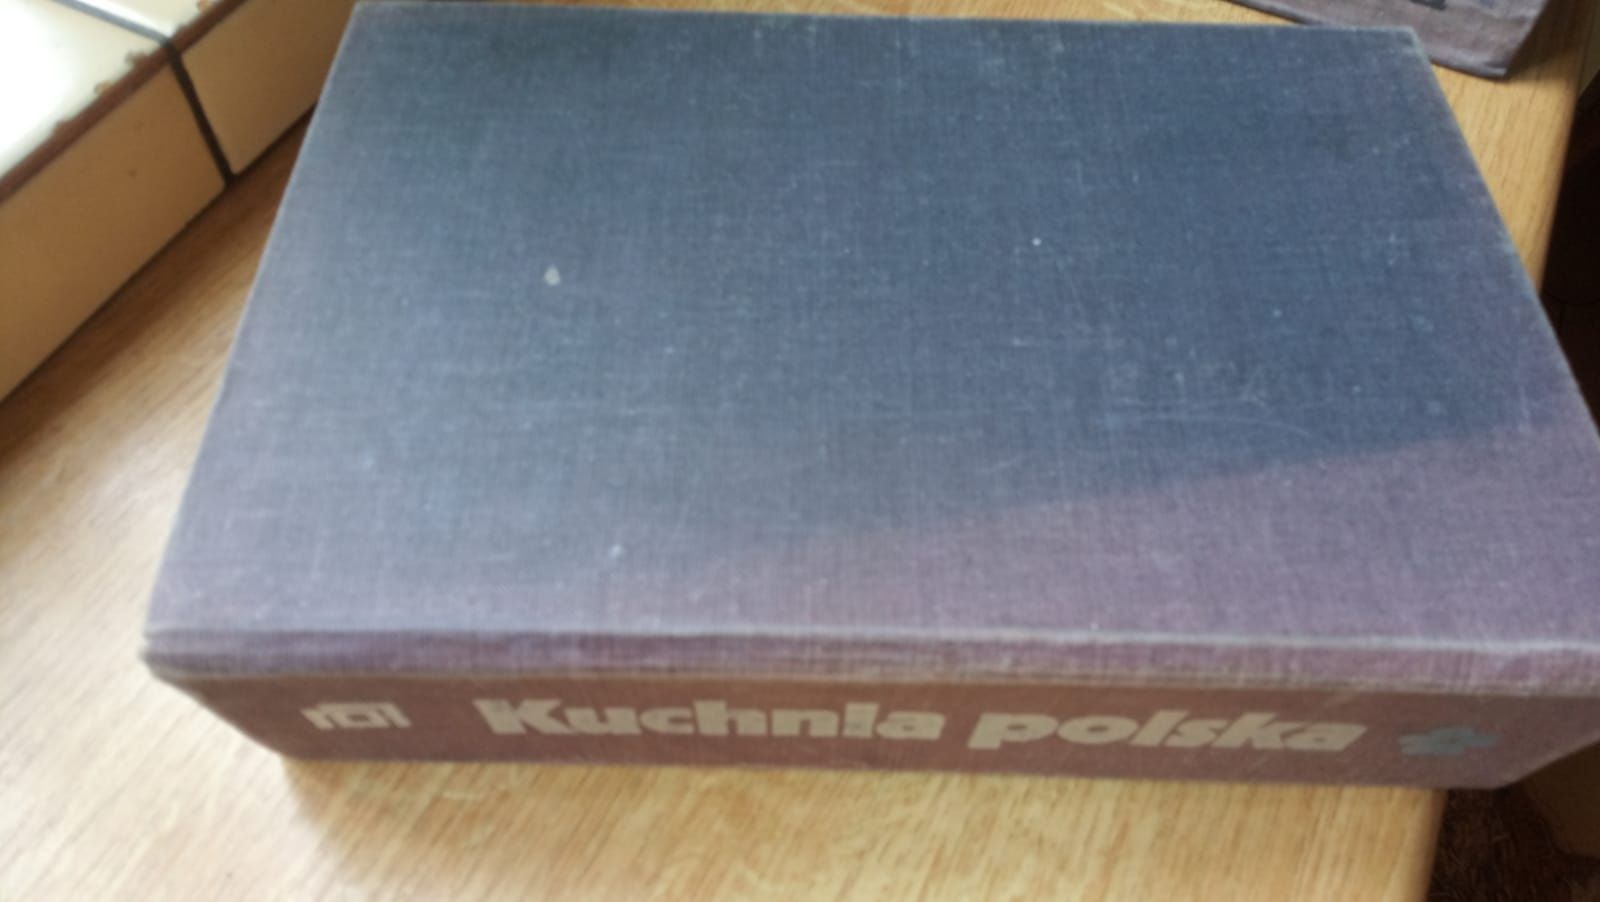 Kuchnia polska Pwe 1984